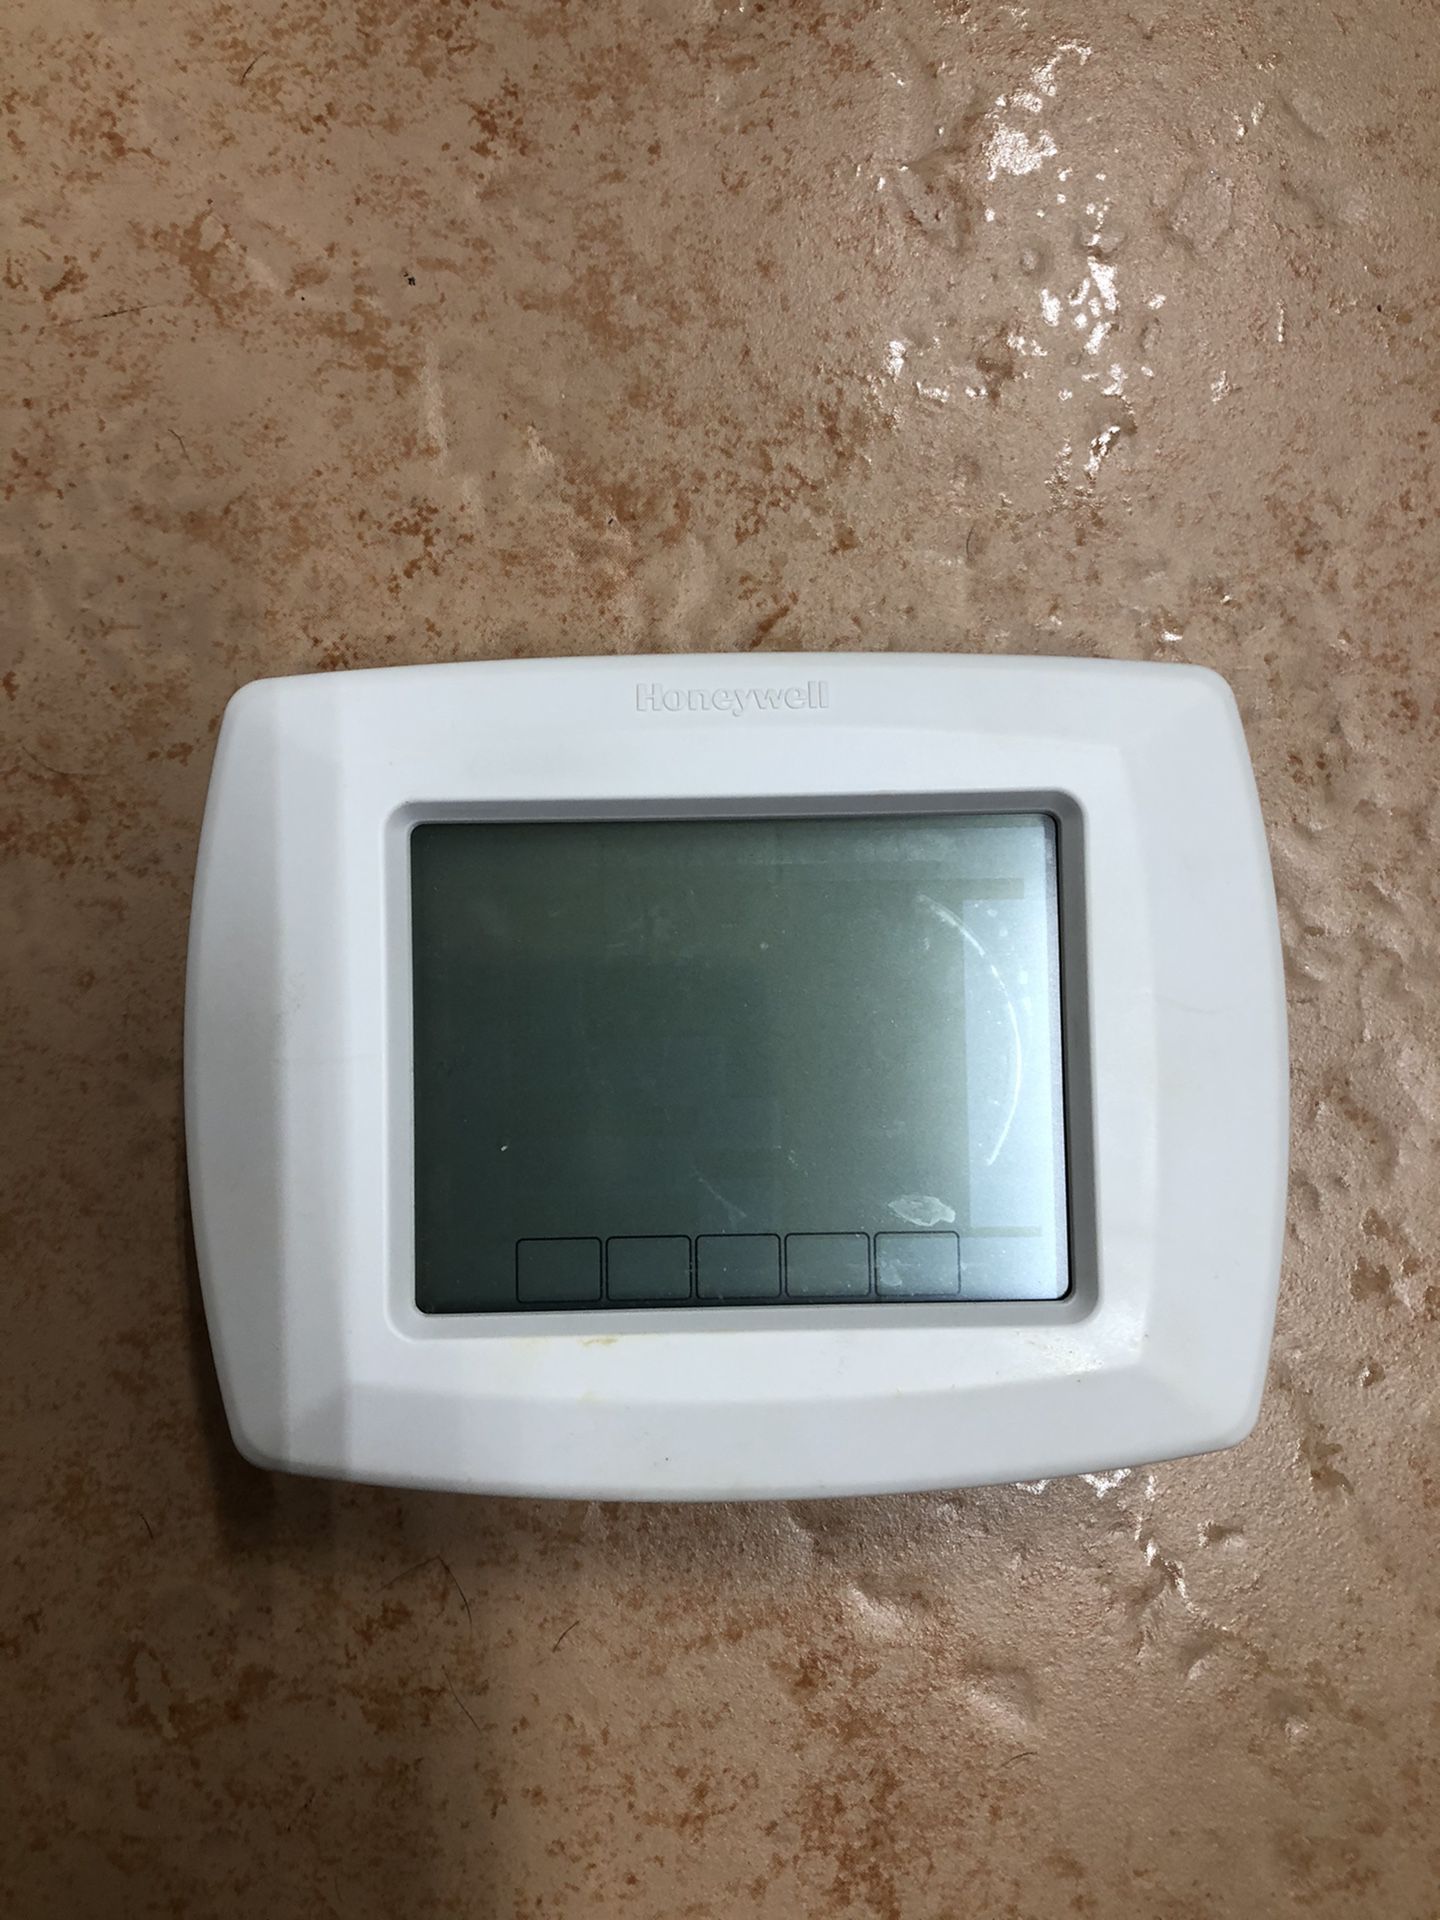 Honeywell RCT8200 digital thermostat